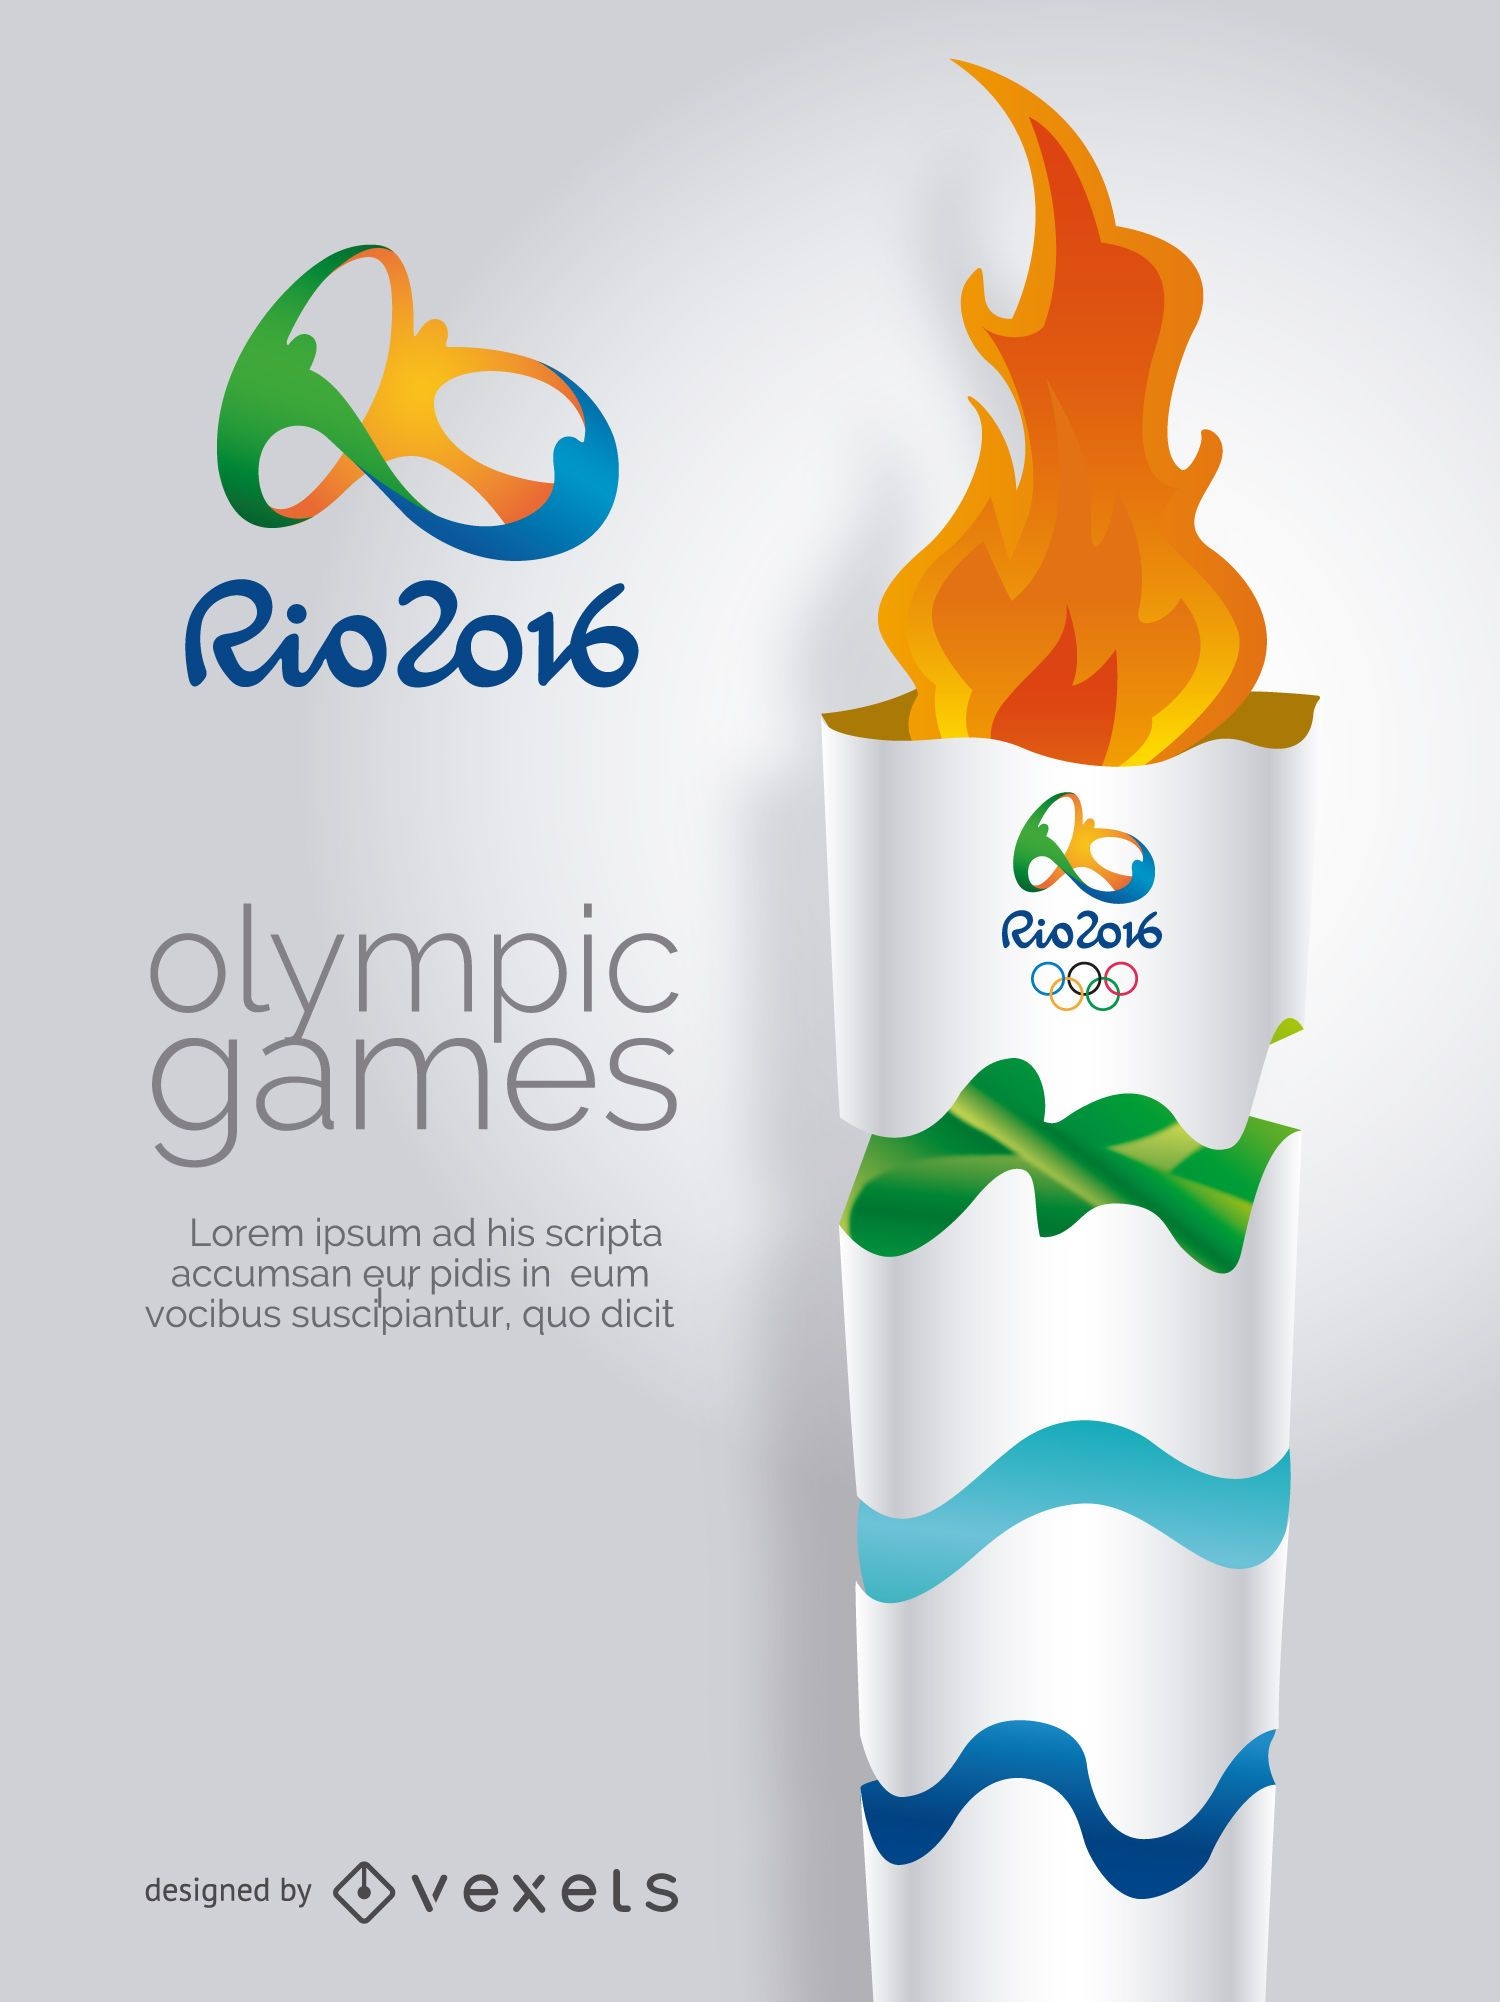 Tocha olímpica - Jogos 2016